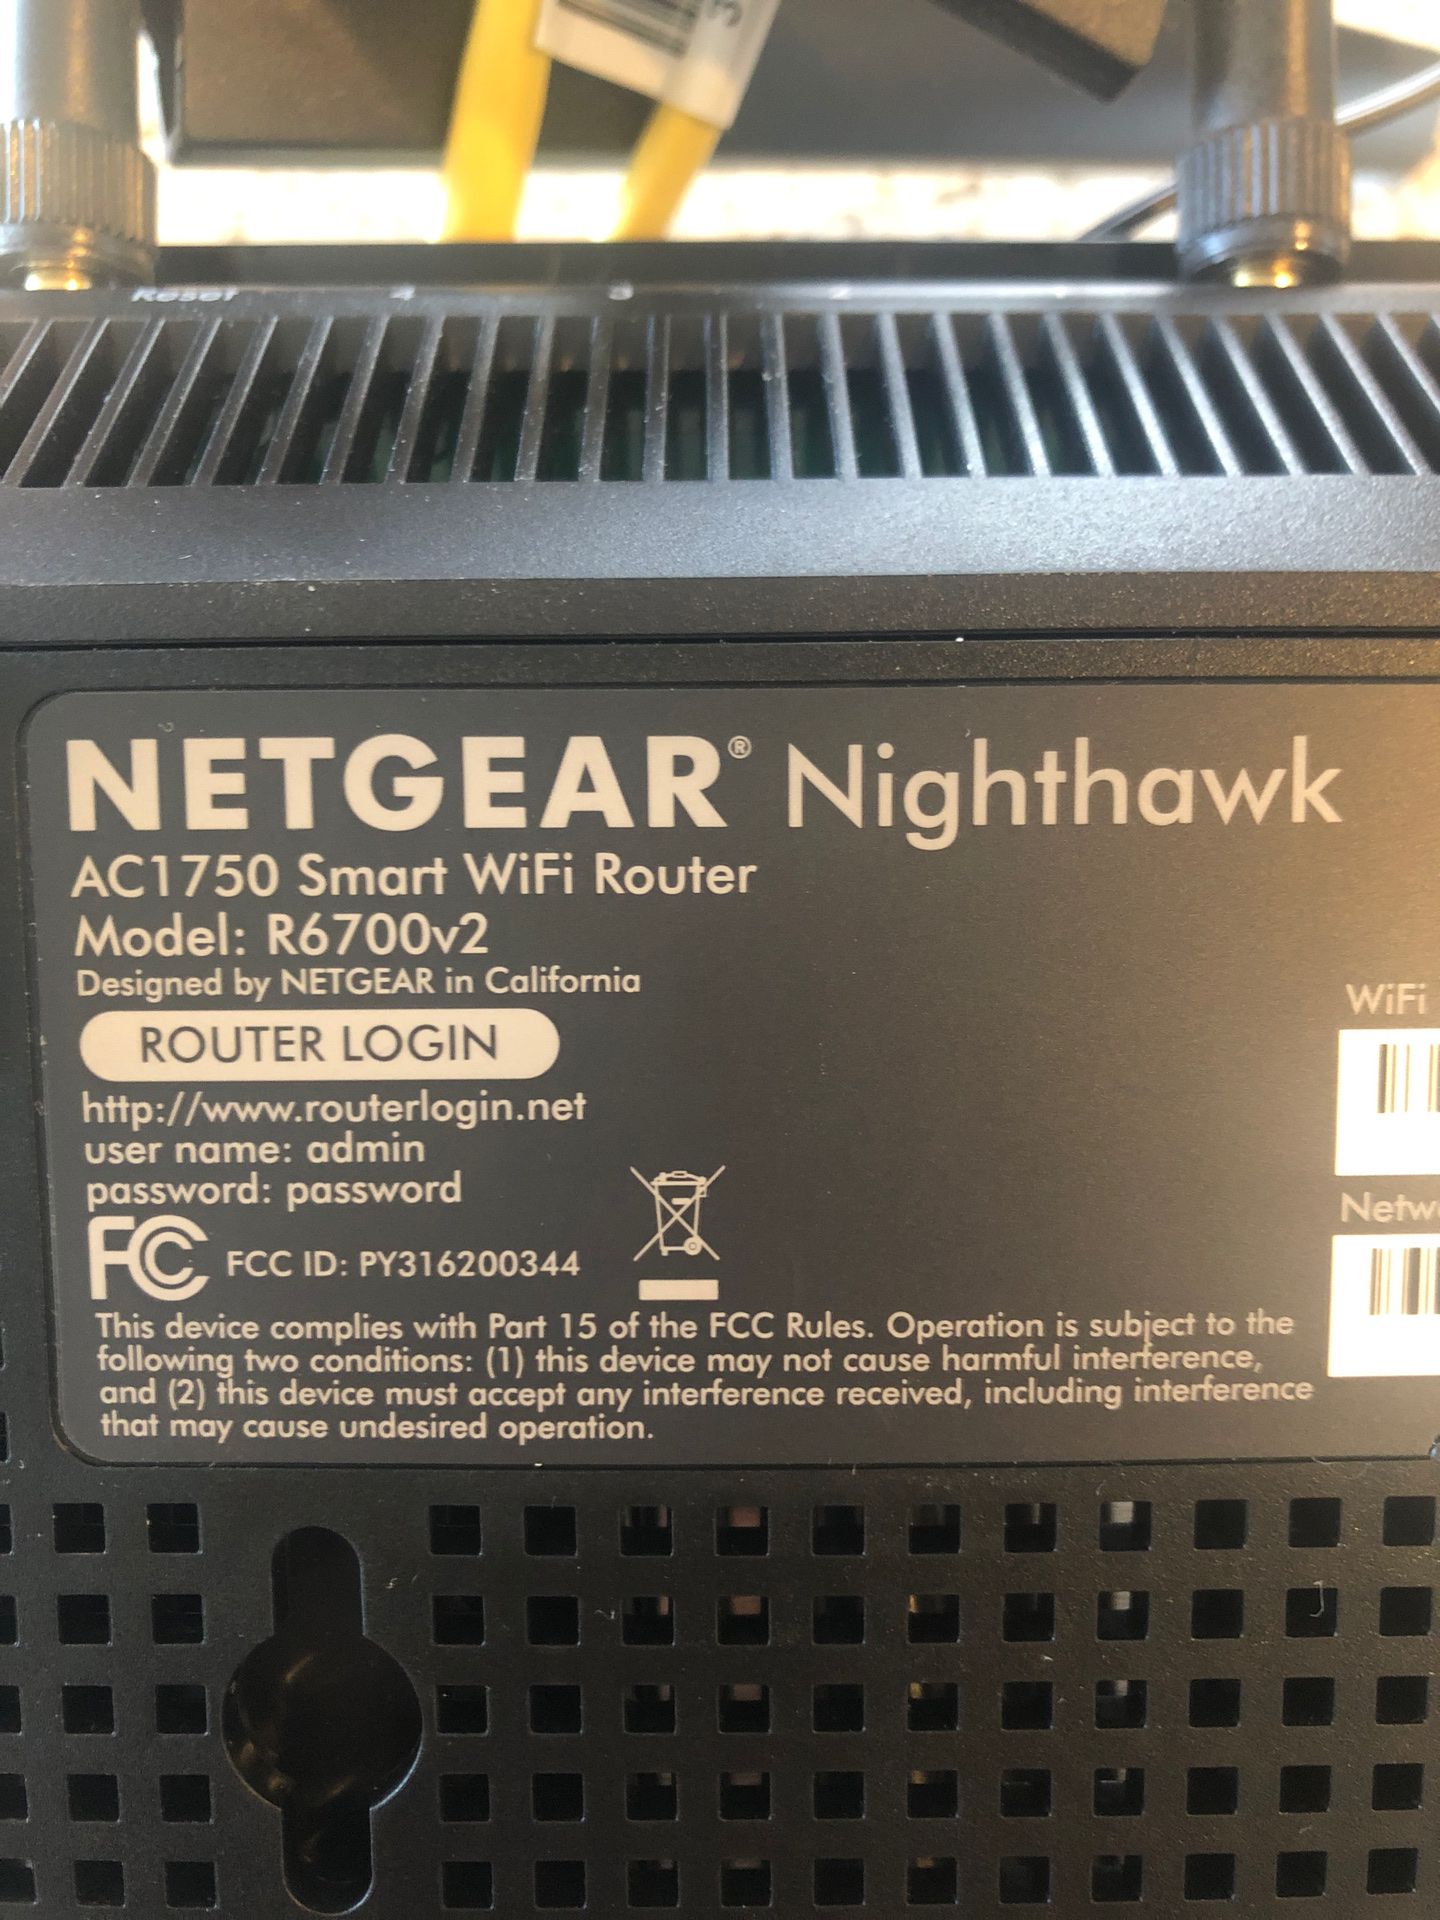 Netgear Nighthawk AC1750 wifi router